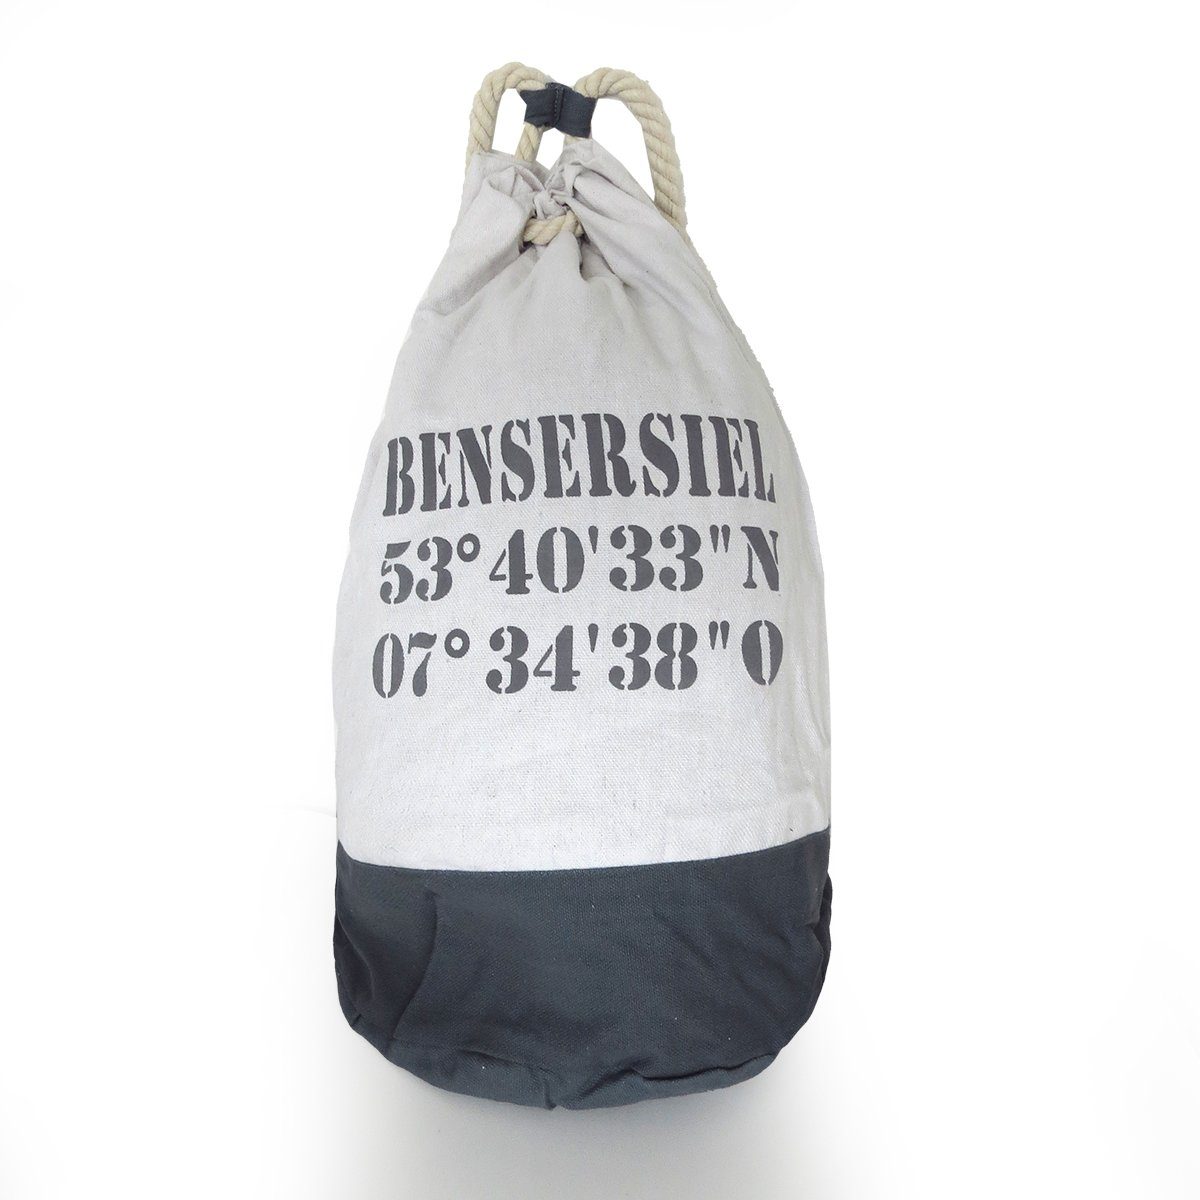 Sonia Originelli Umhängetasche XL Seesack "Bensersiel" Marinesack Bag Maritim grau